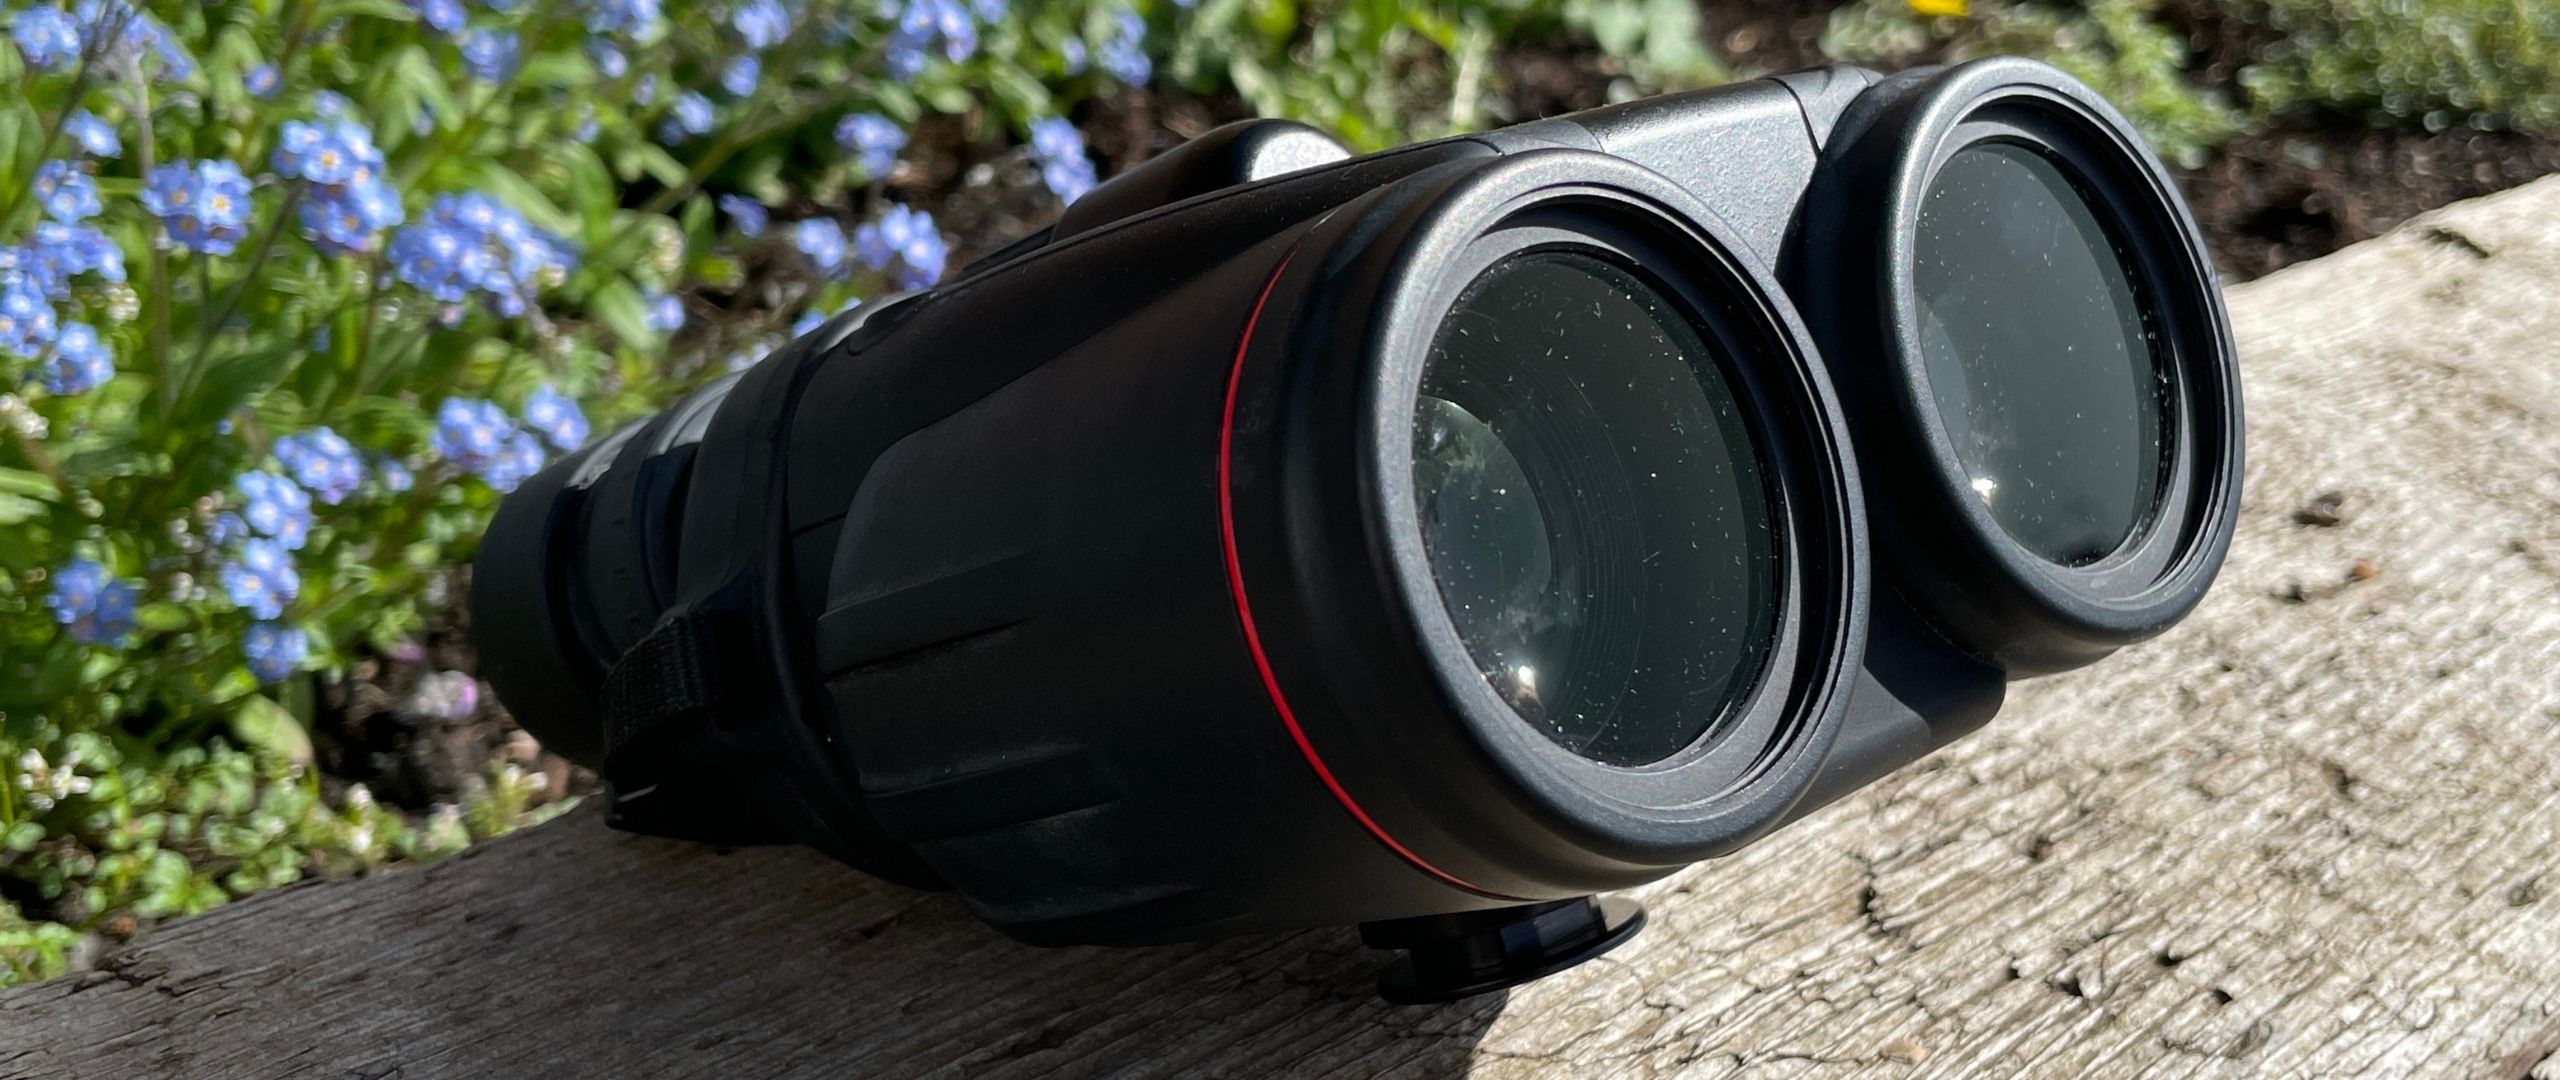 Canon 10x42L IS WP binocular review | Digital Camera World